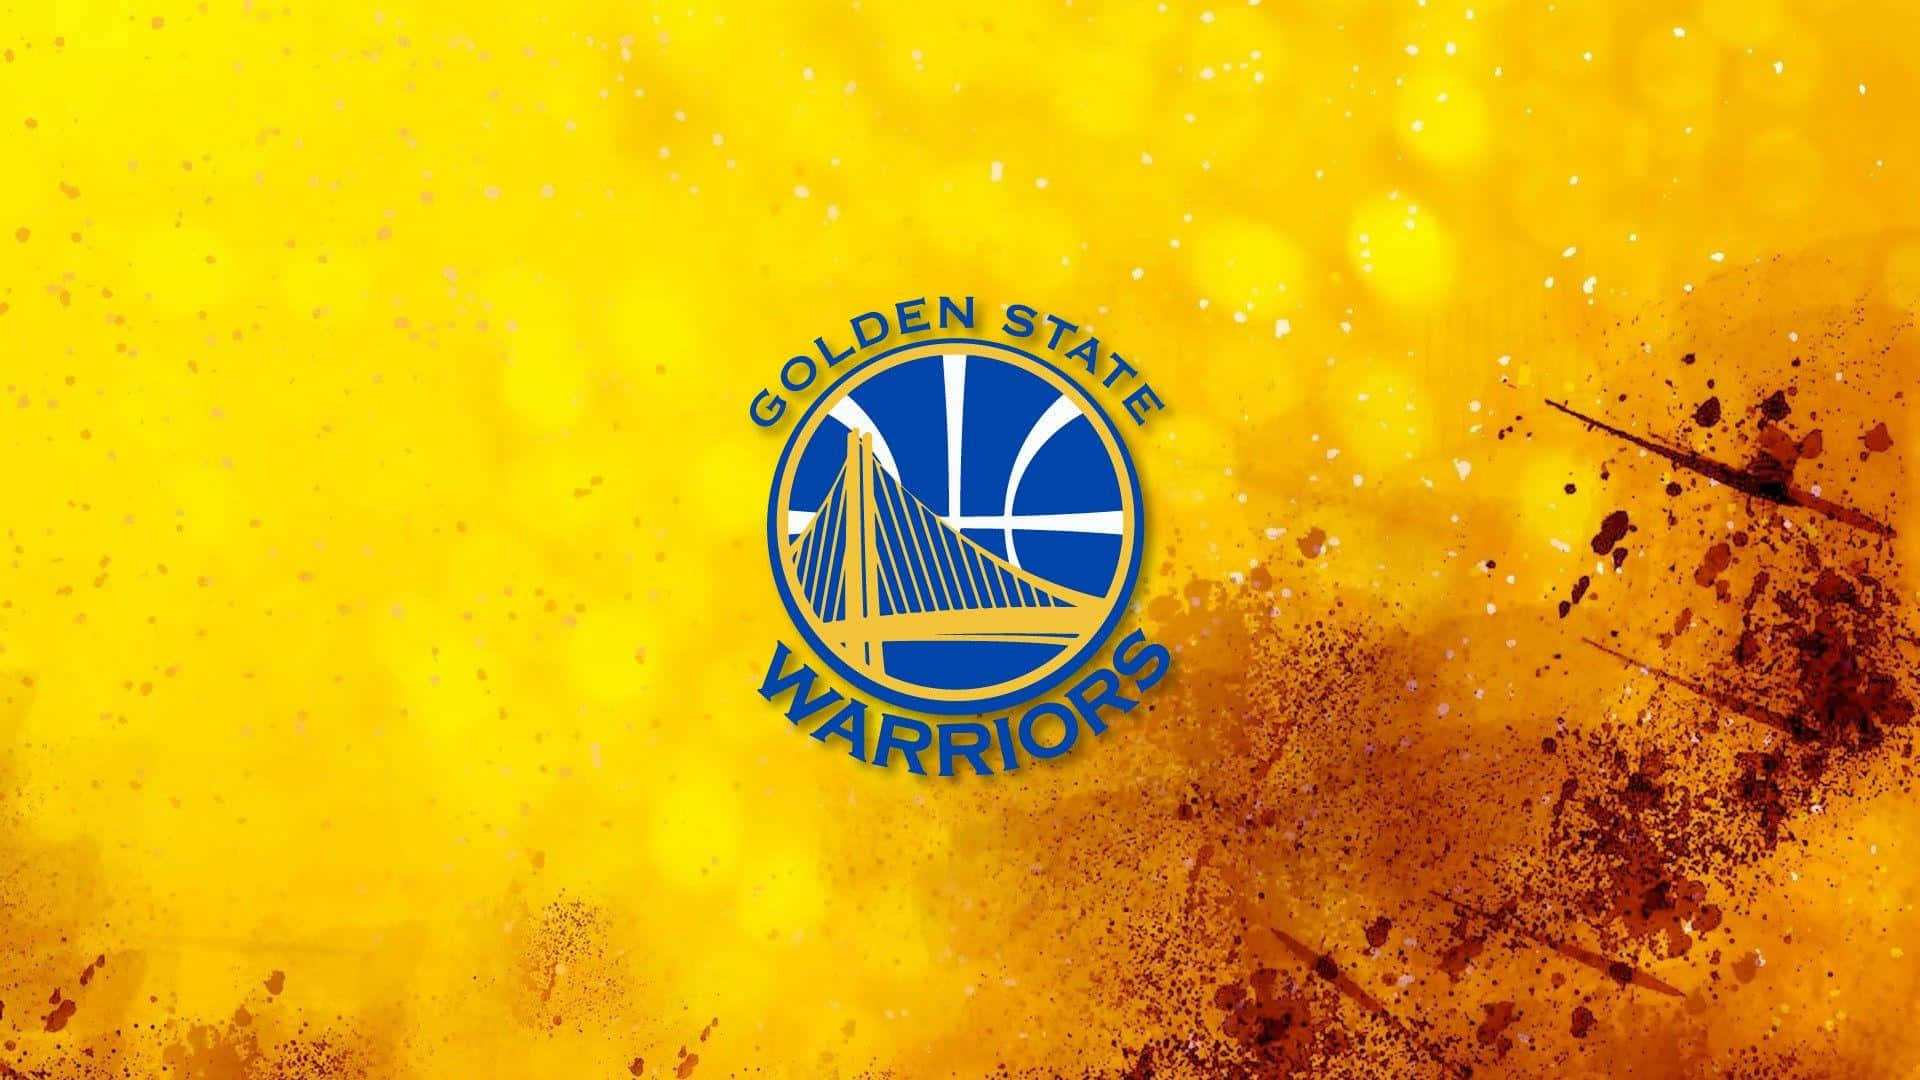 Golden State Warriors Logo Splash Background Wallpaper